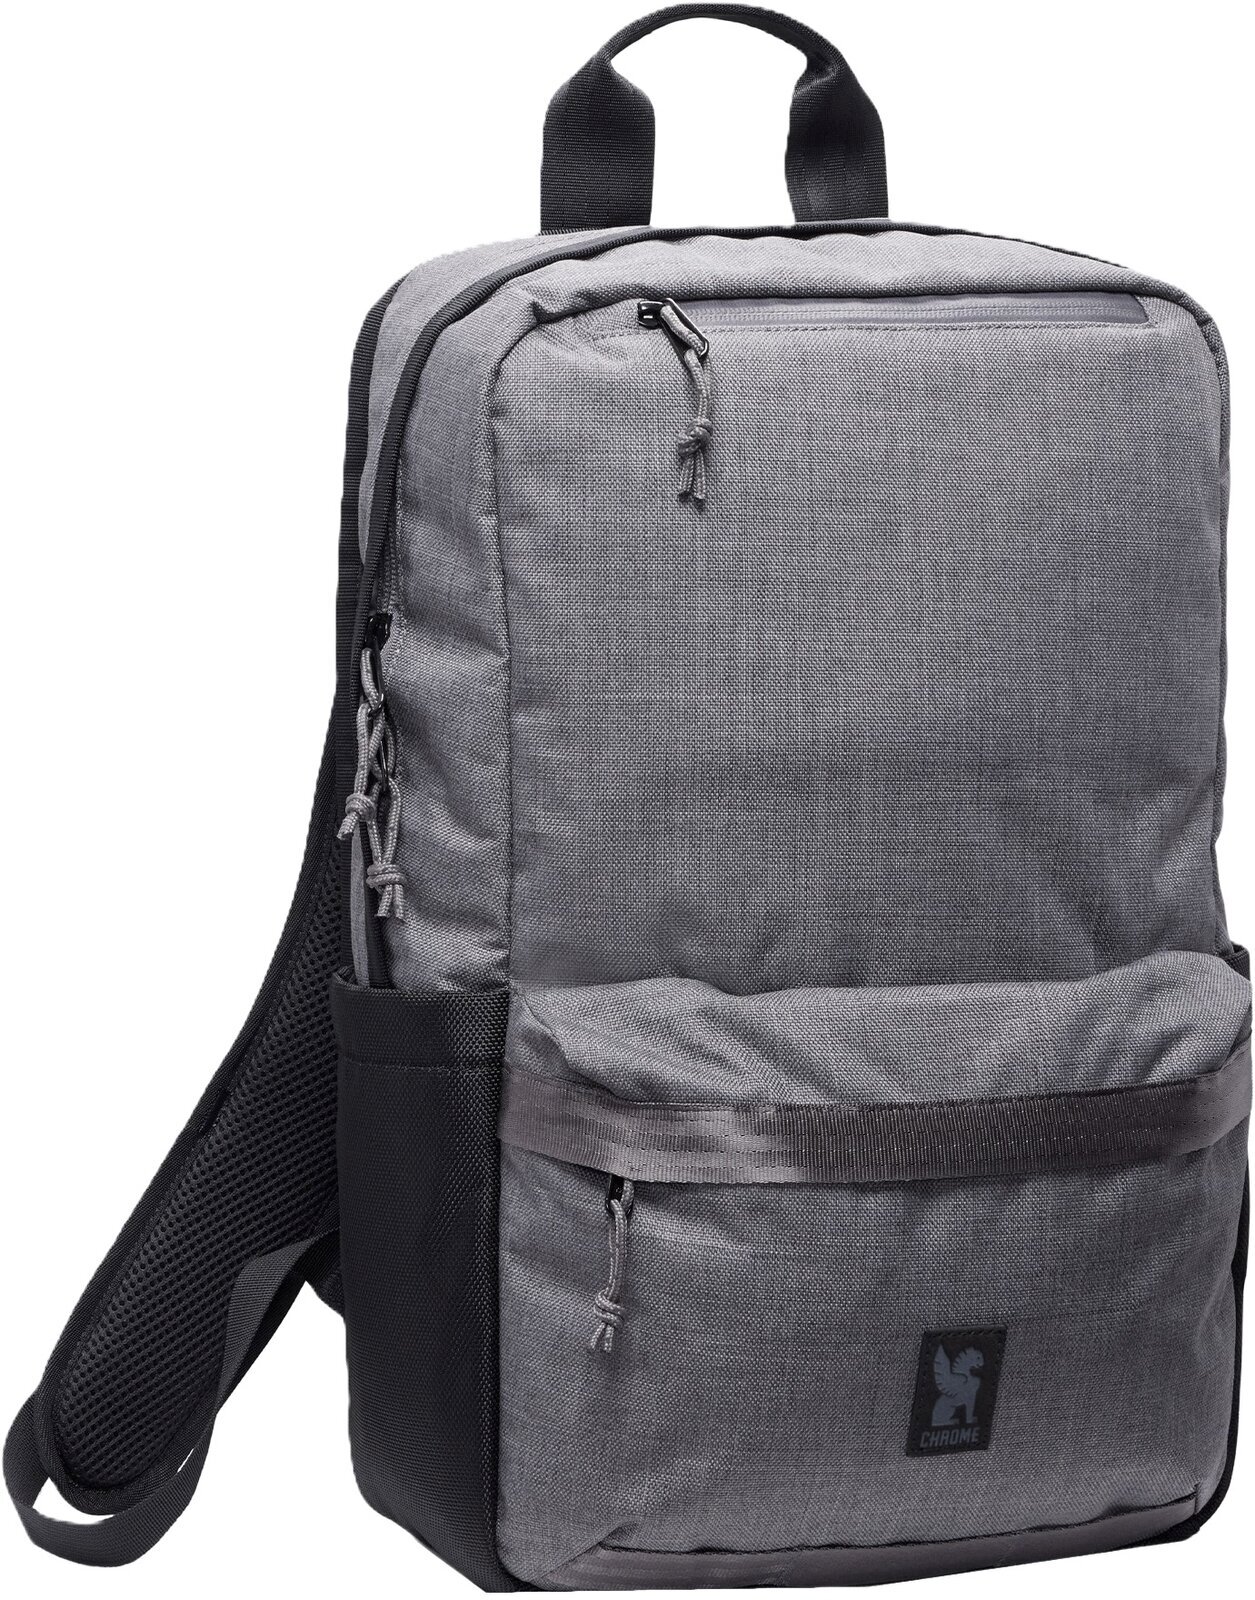 Lifestyle Backpack / Bag Chrome Hondo Backpack Castlerock Twill 18 L Backpack